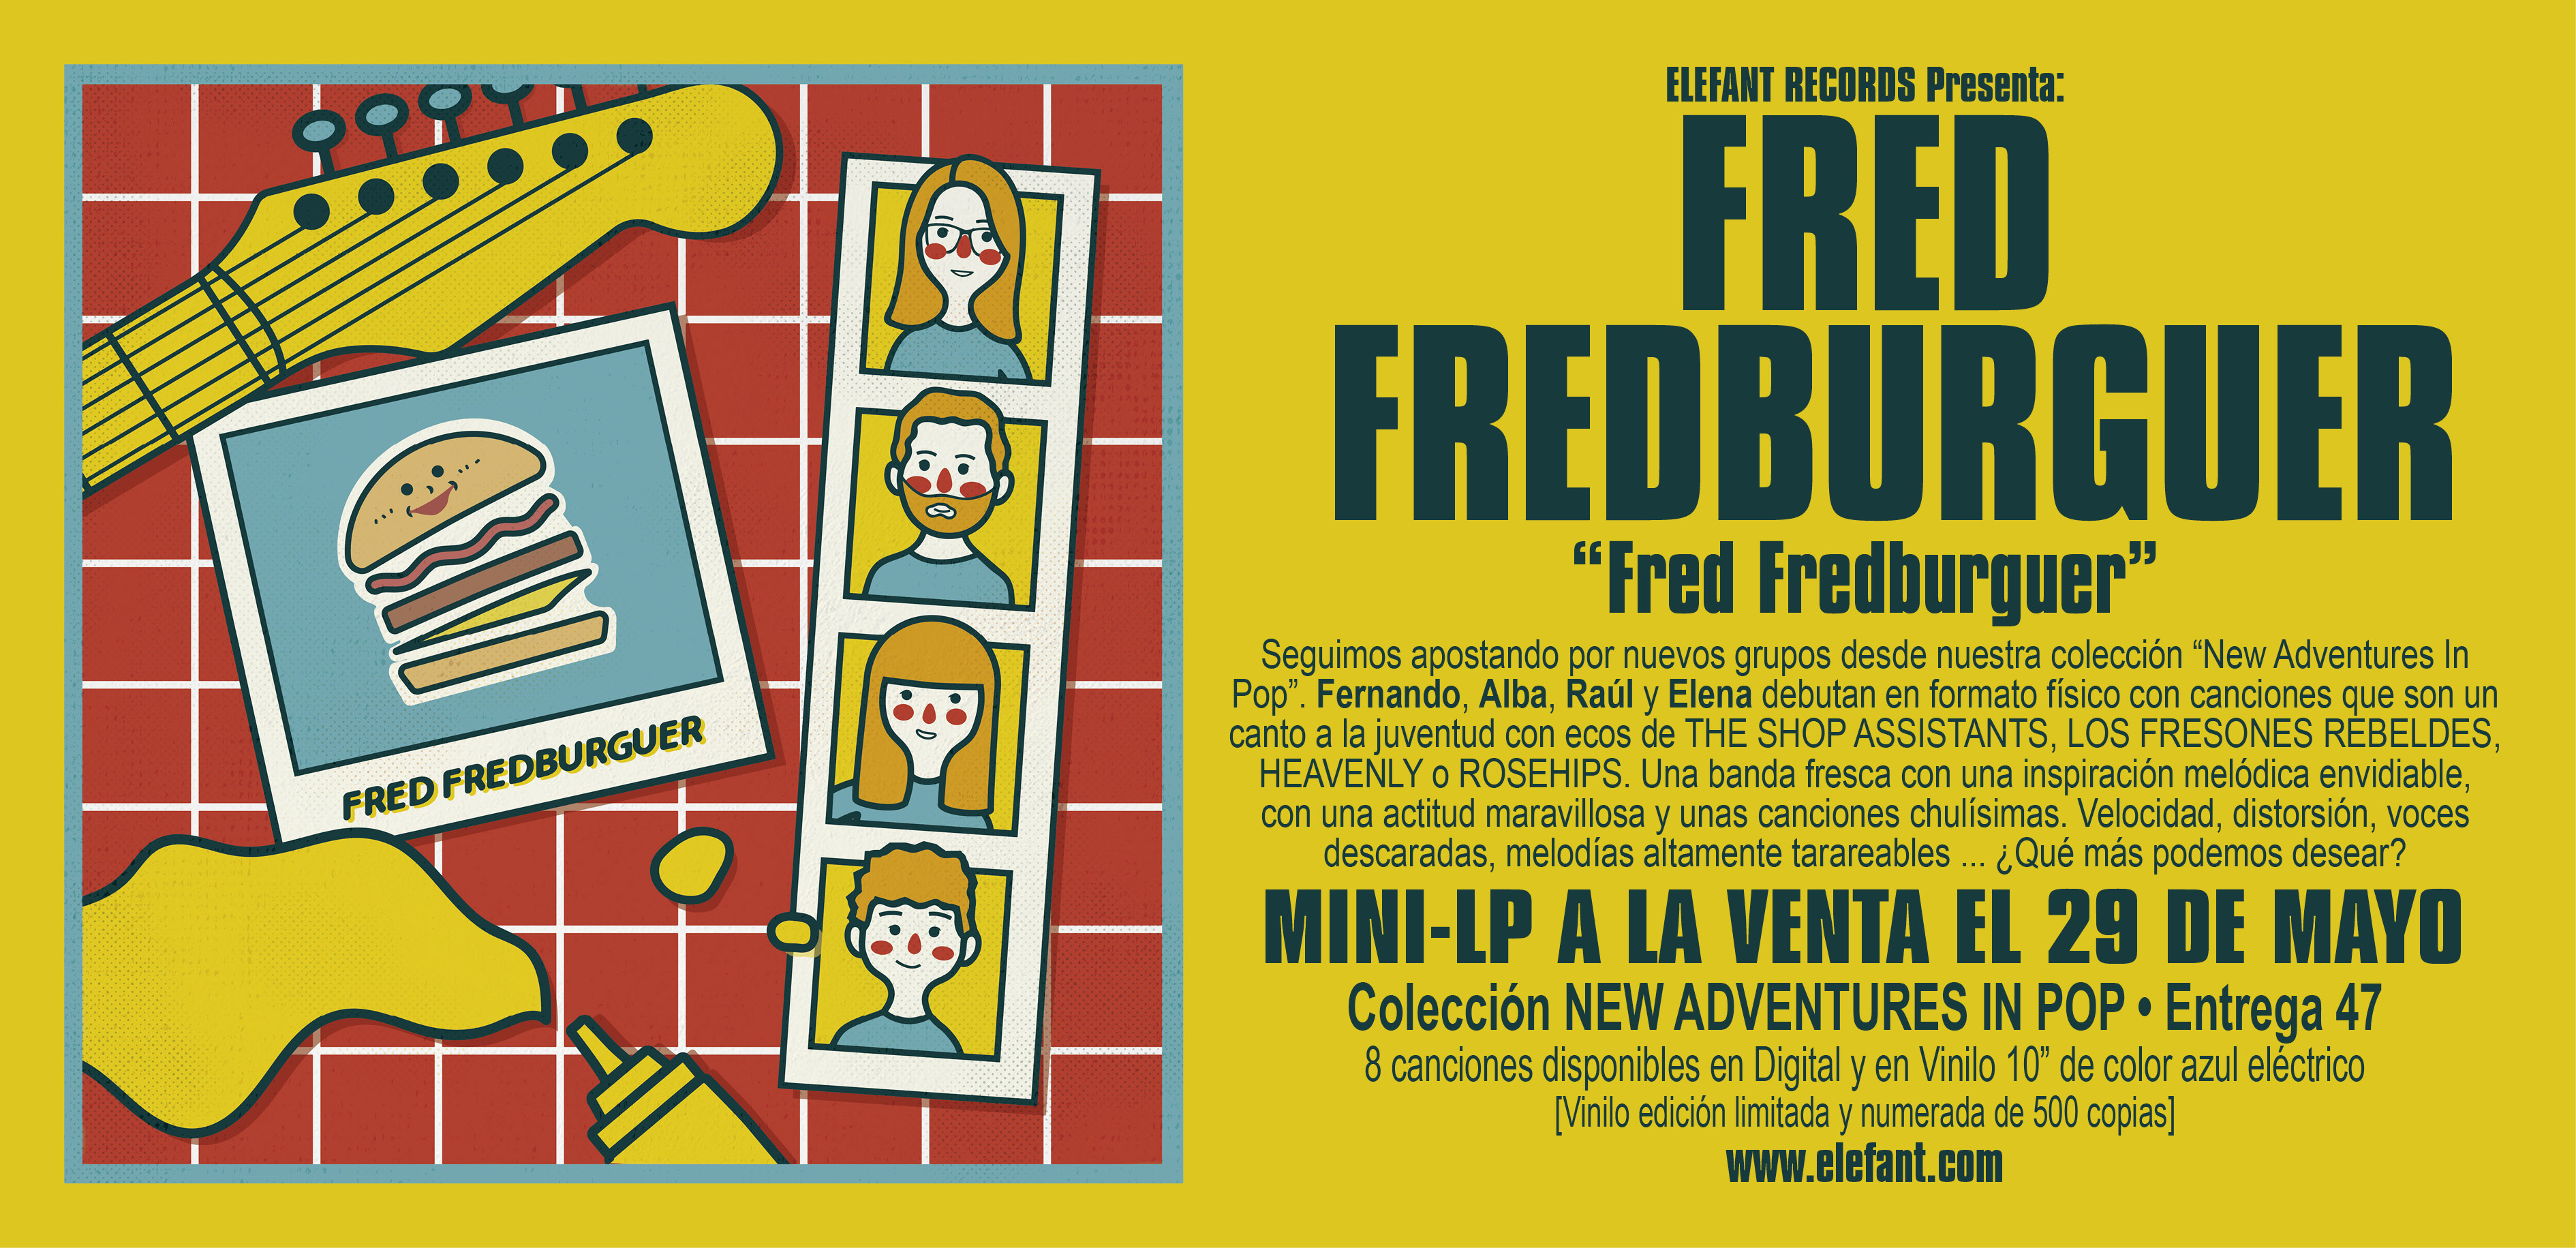 Fred Fredburguer "Fred Fredburguer" Mini-LP